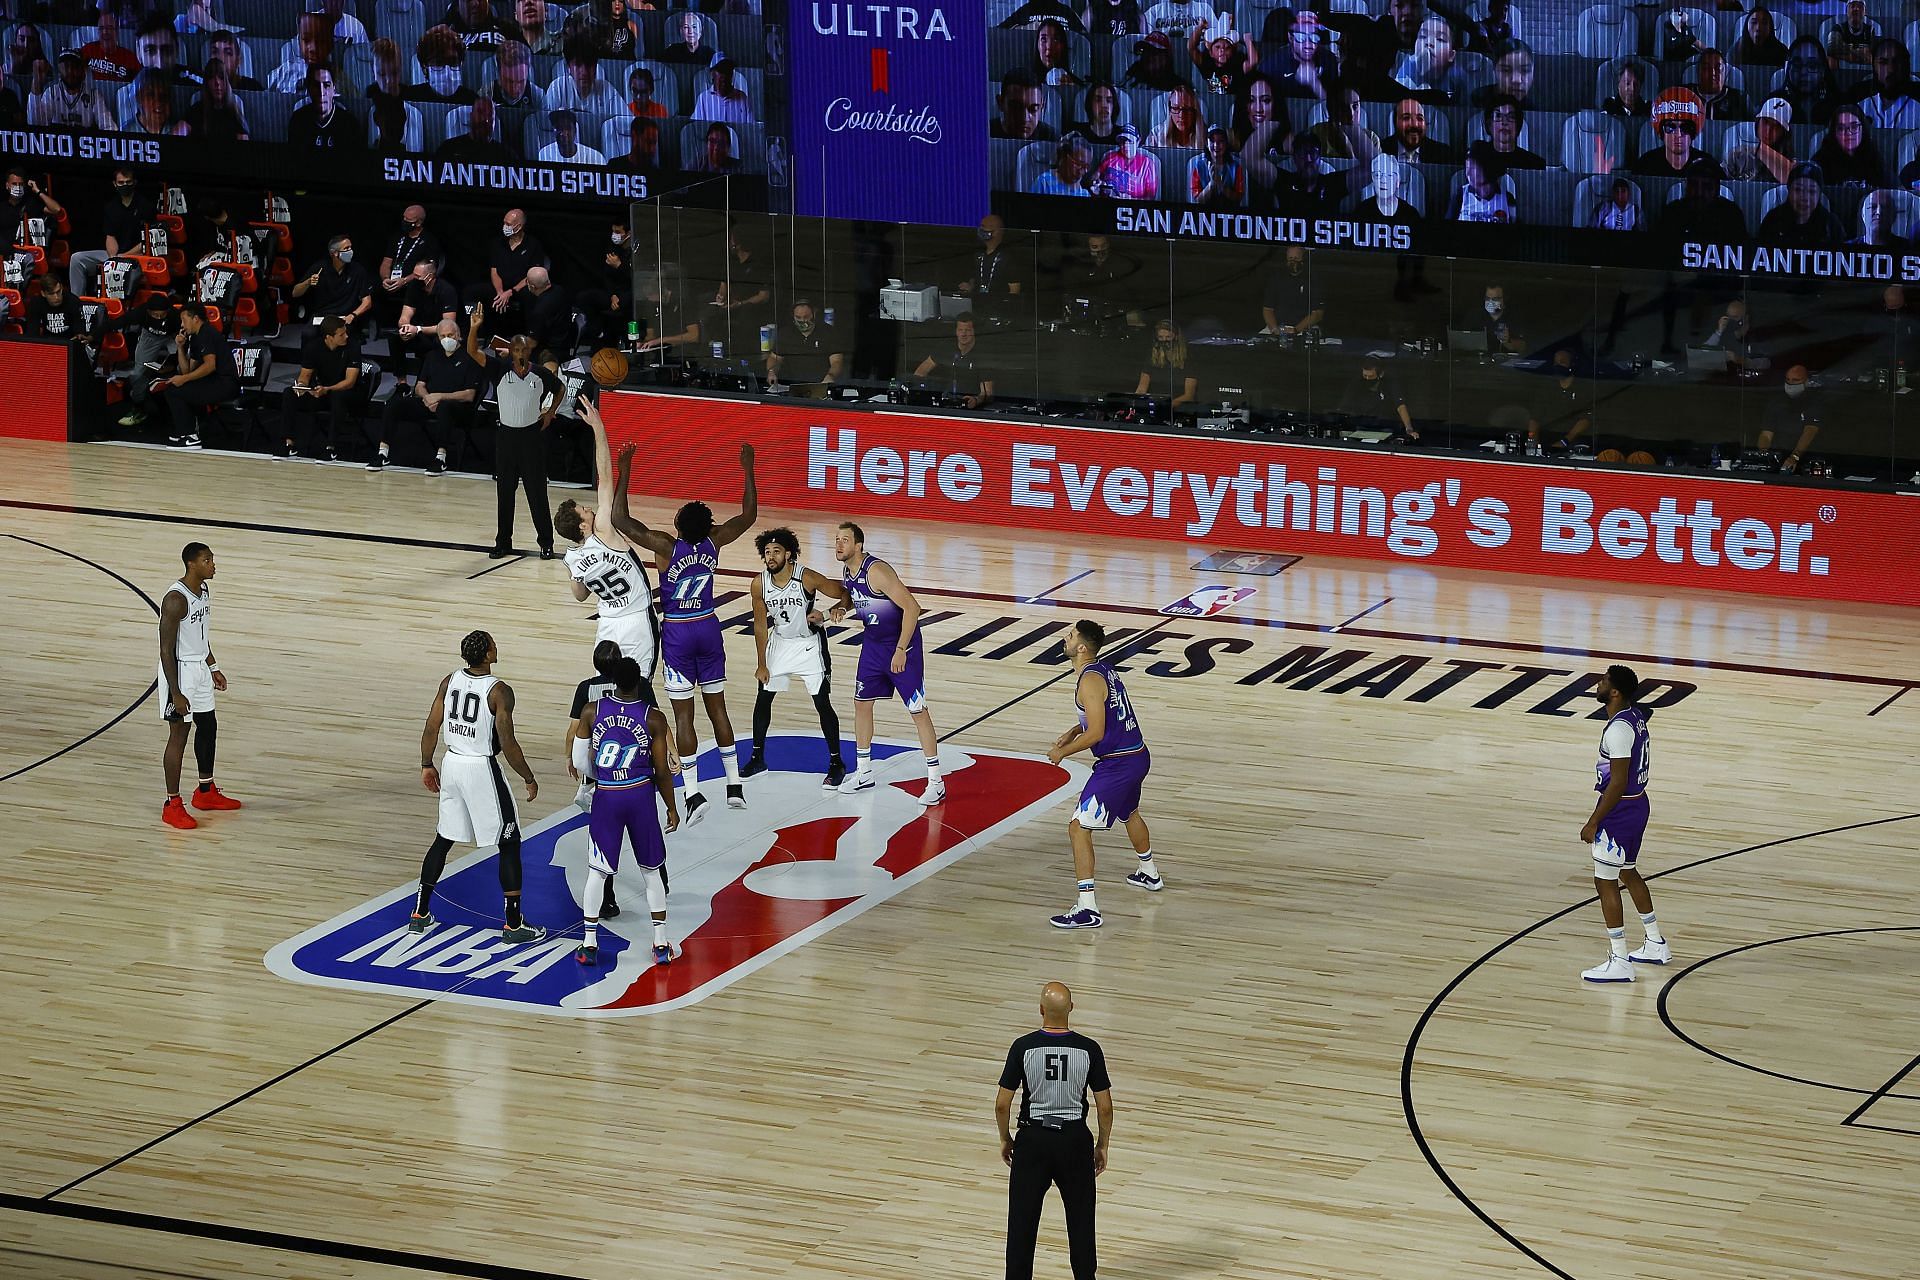 The San Antonio Spurs will host the Utah Jazz on December 27th